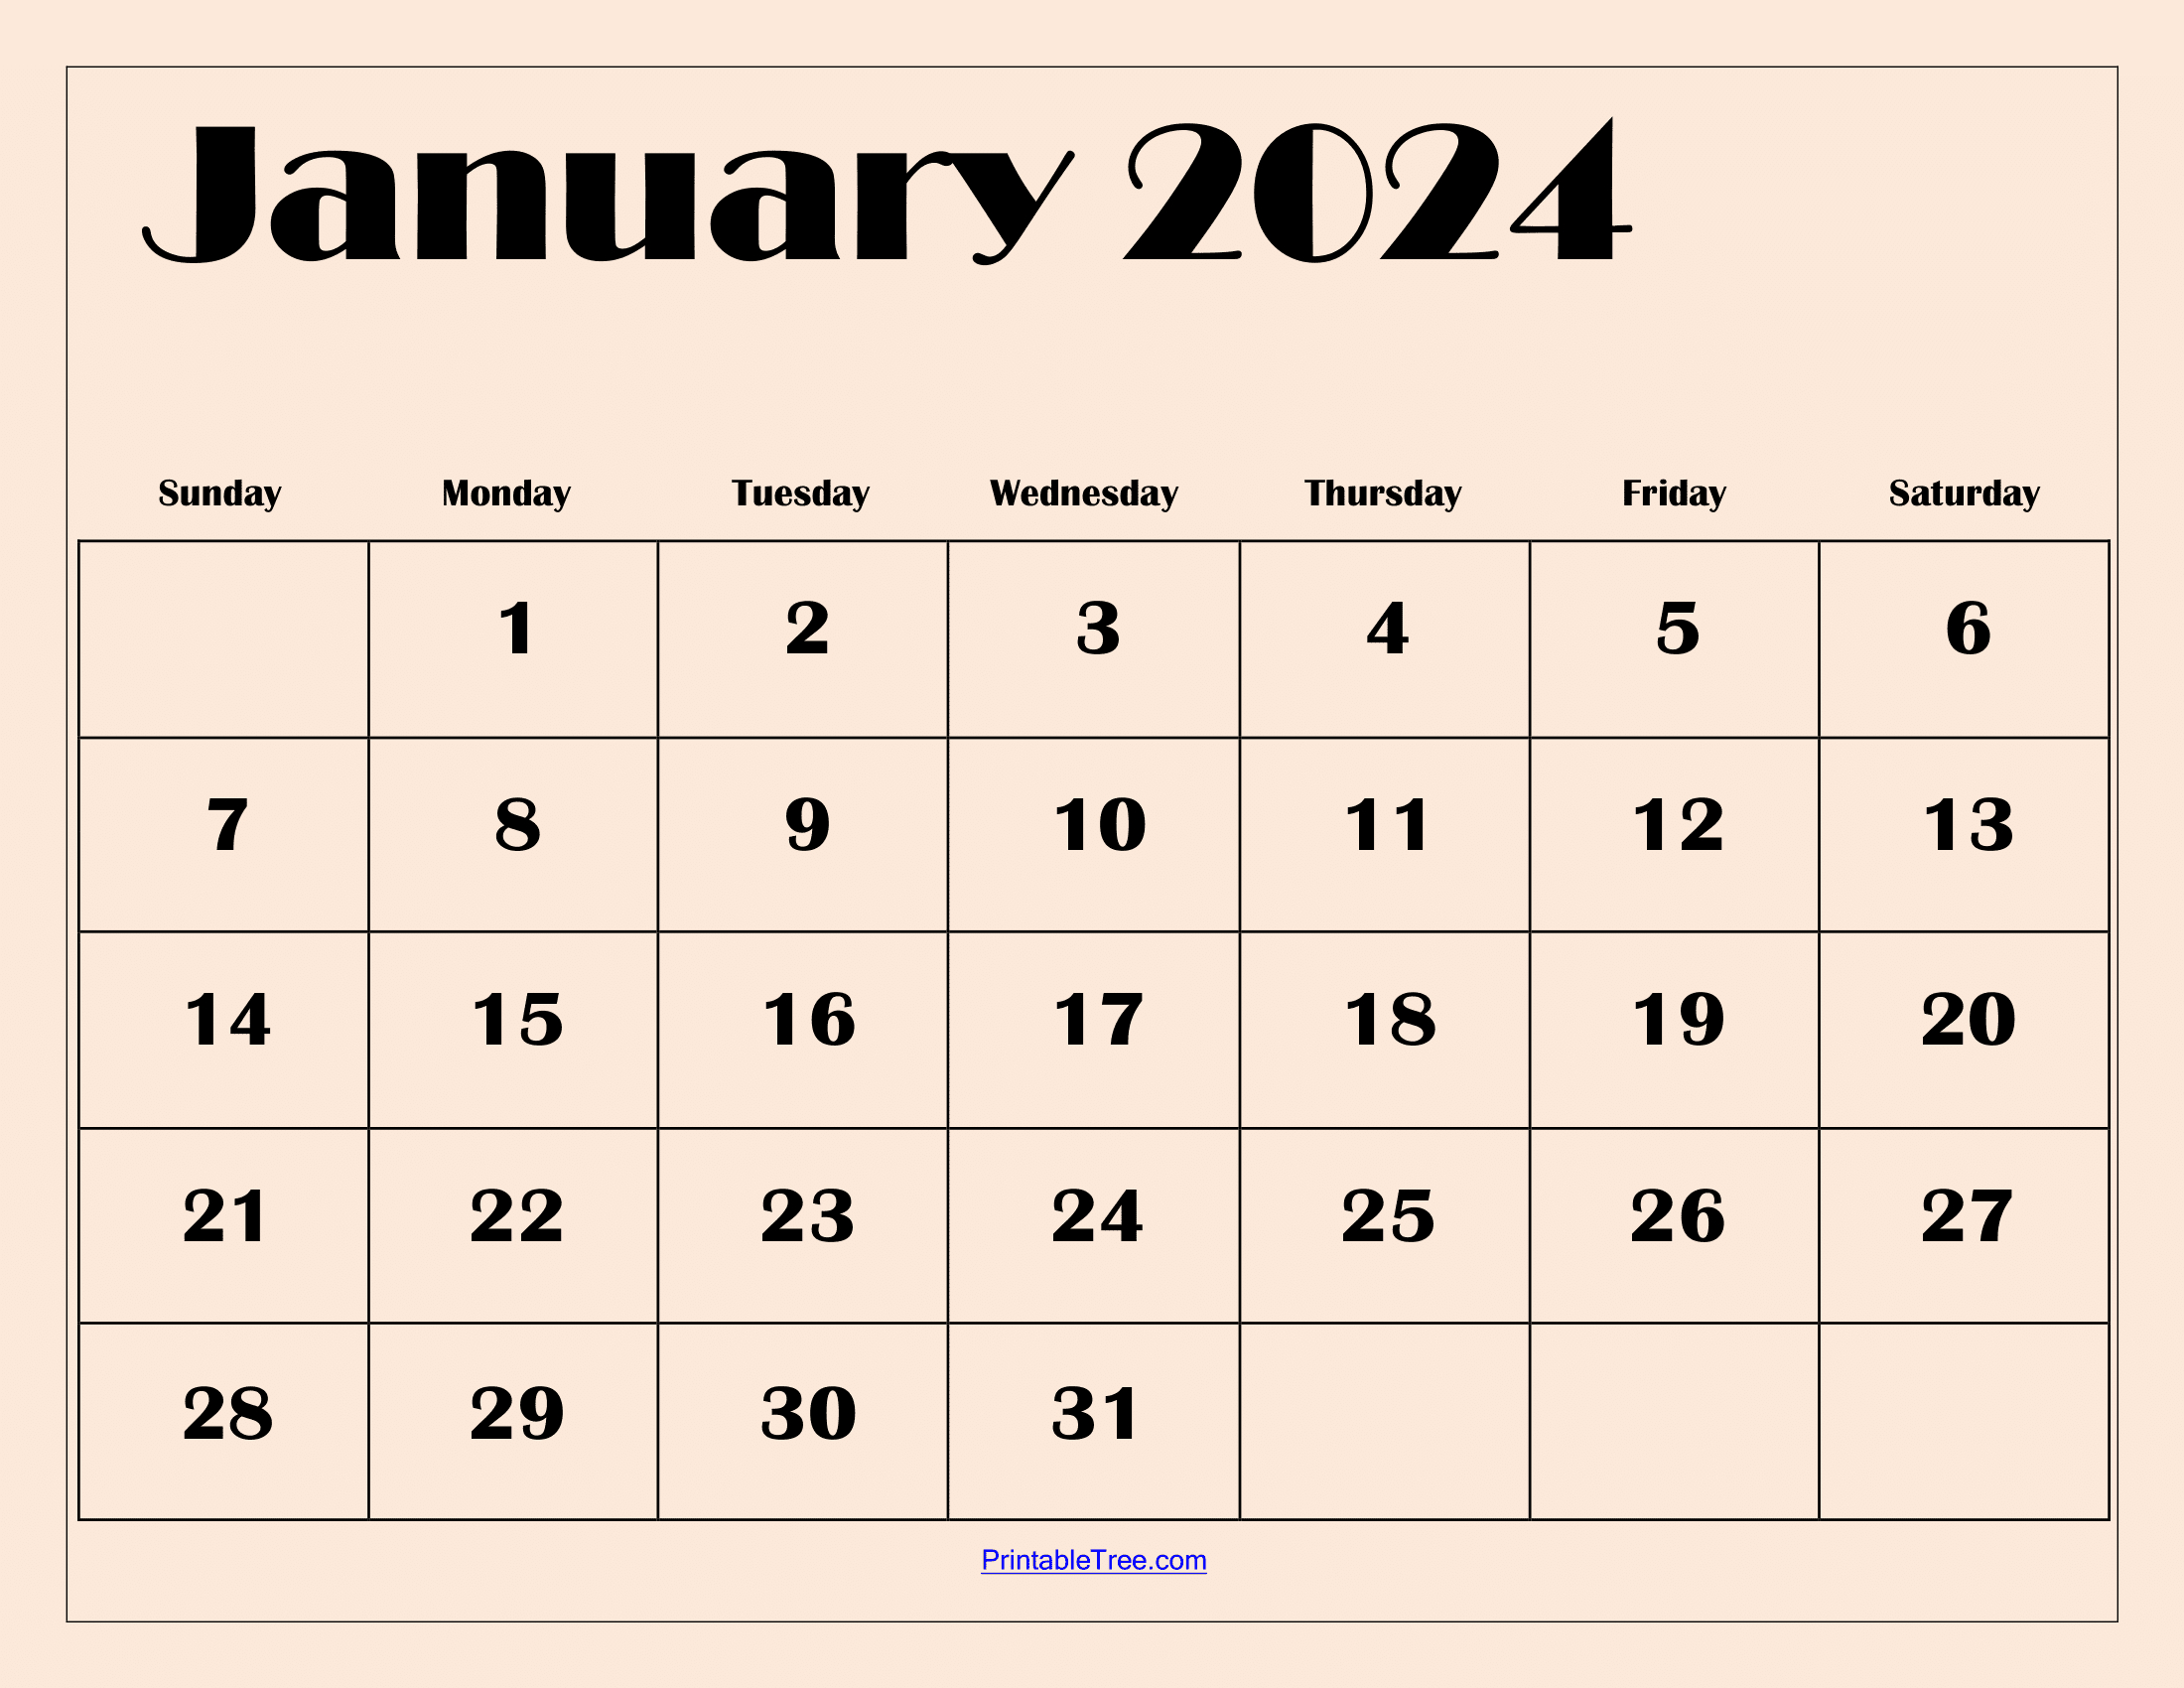 January 2024 Calendar Printable Pdf Template With Holidays | Printable Calendar 2024 January Pdf